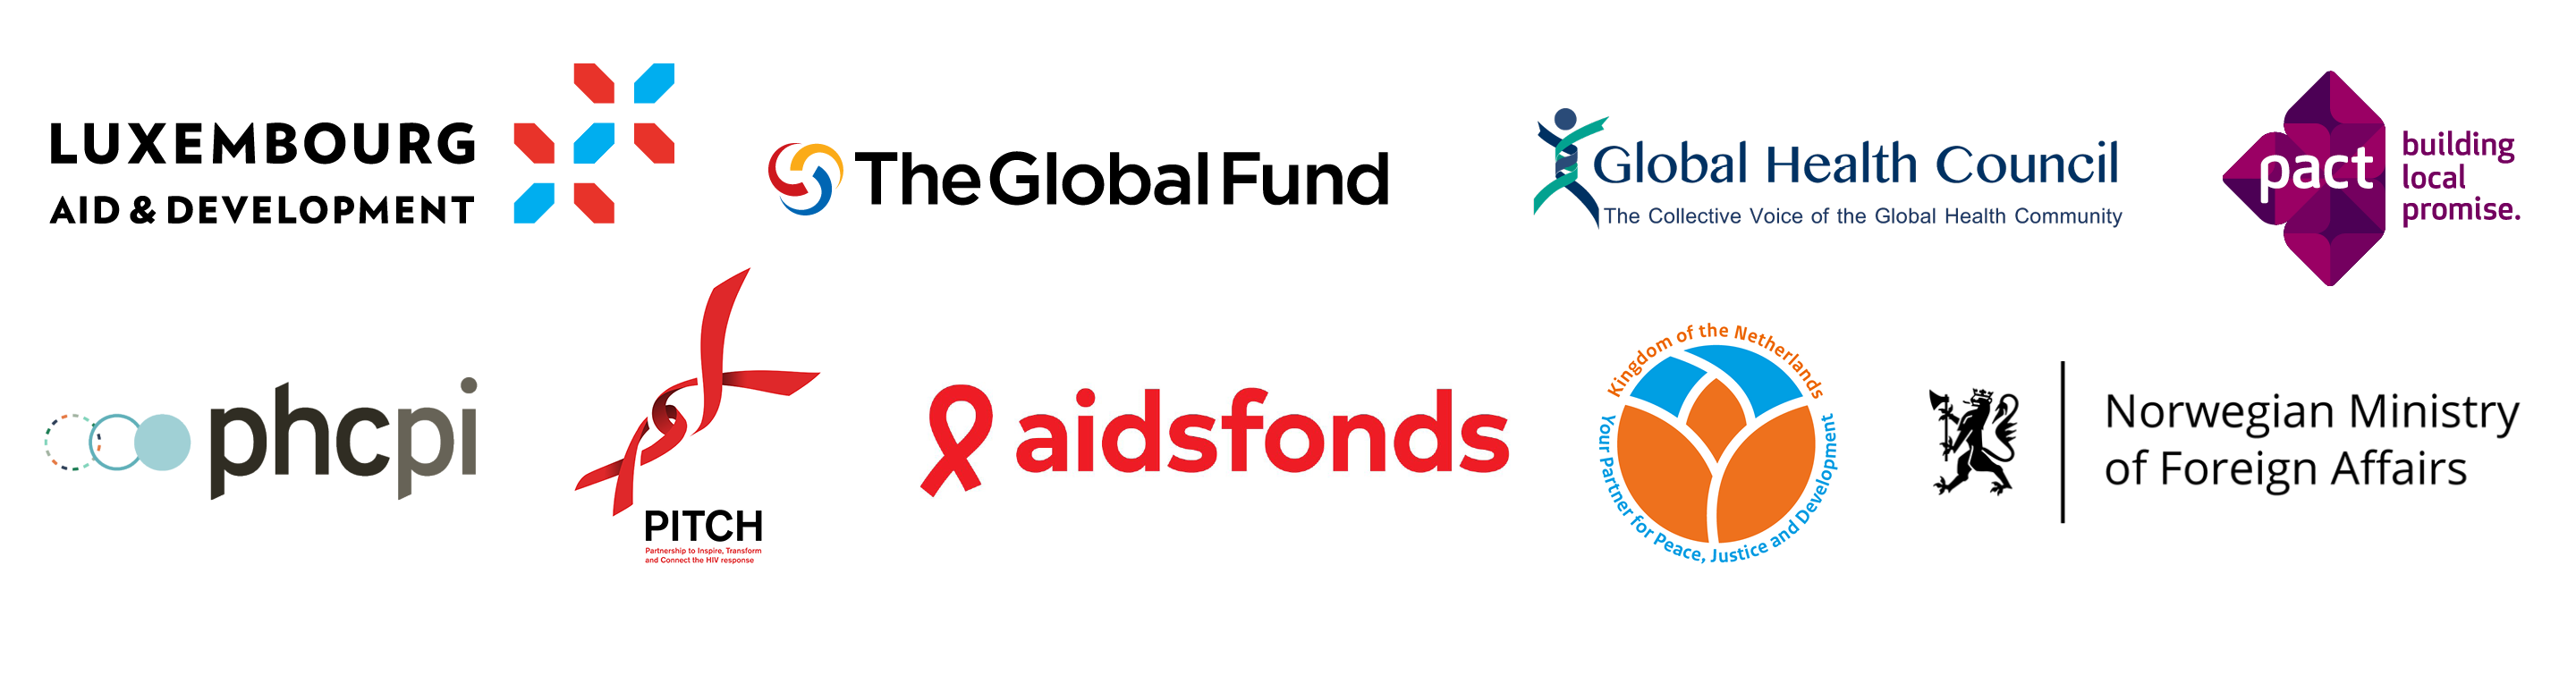 Co-sponsor logos